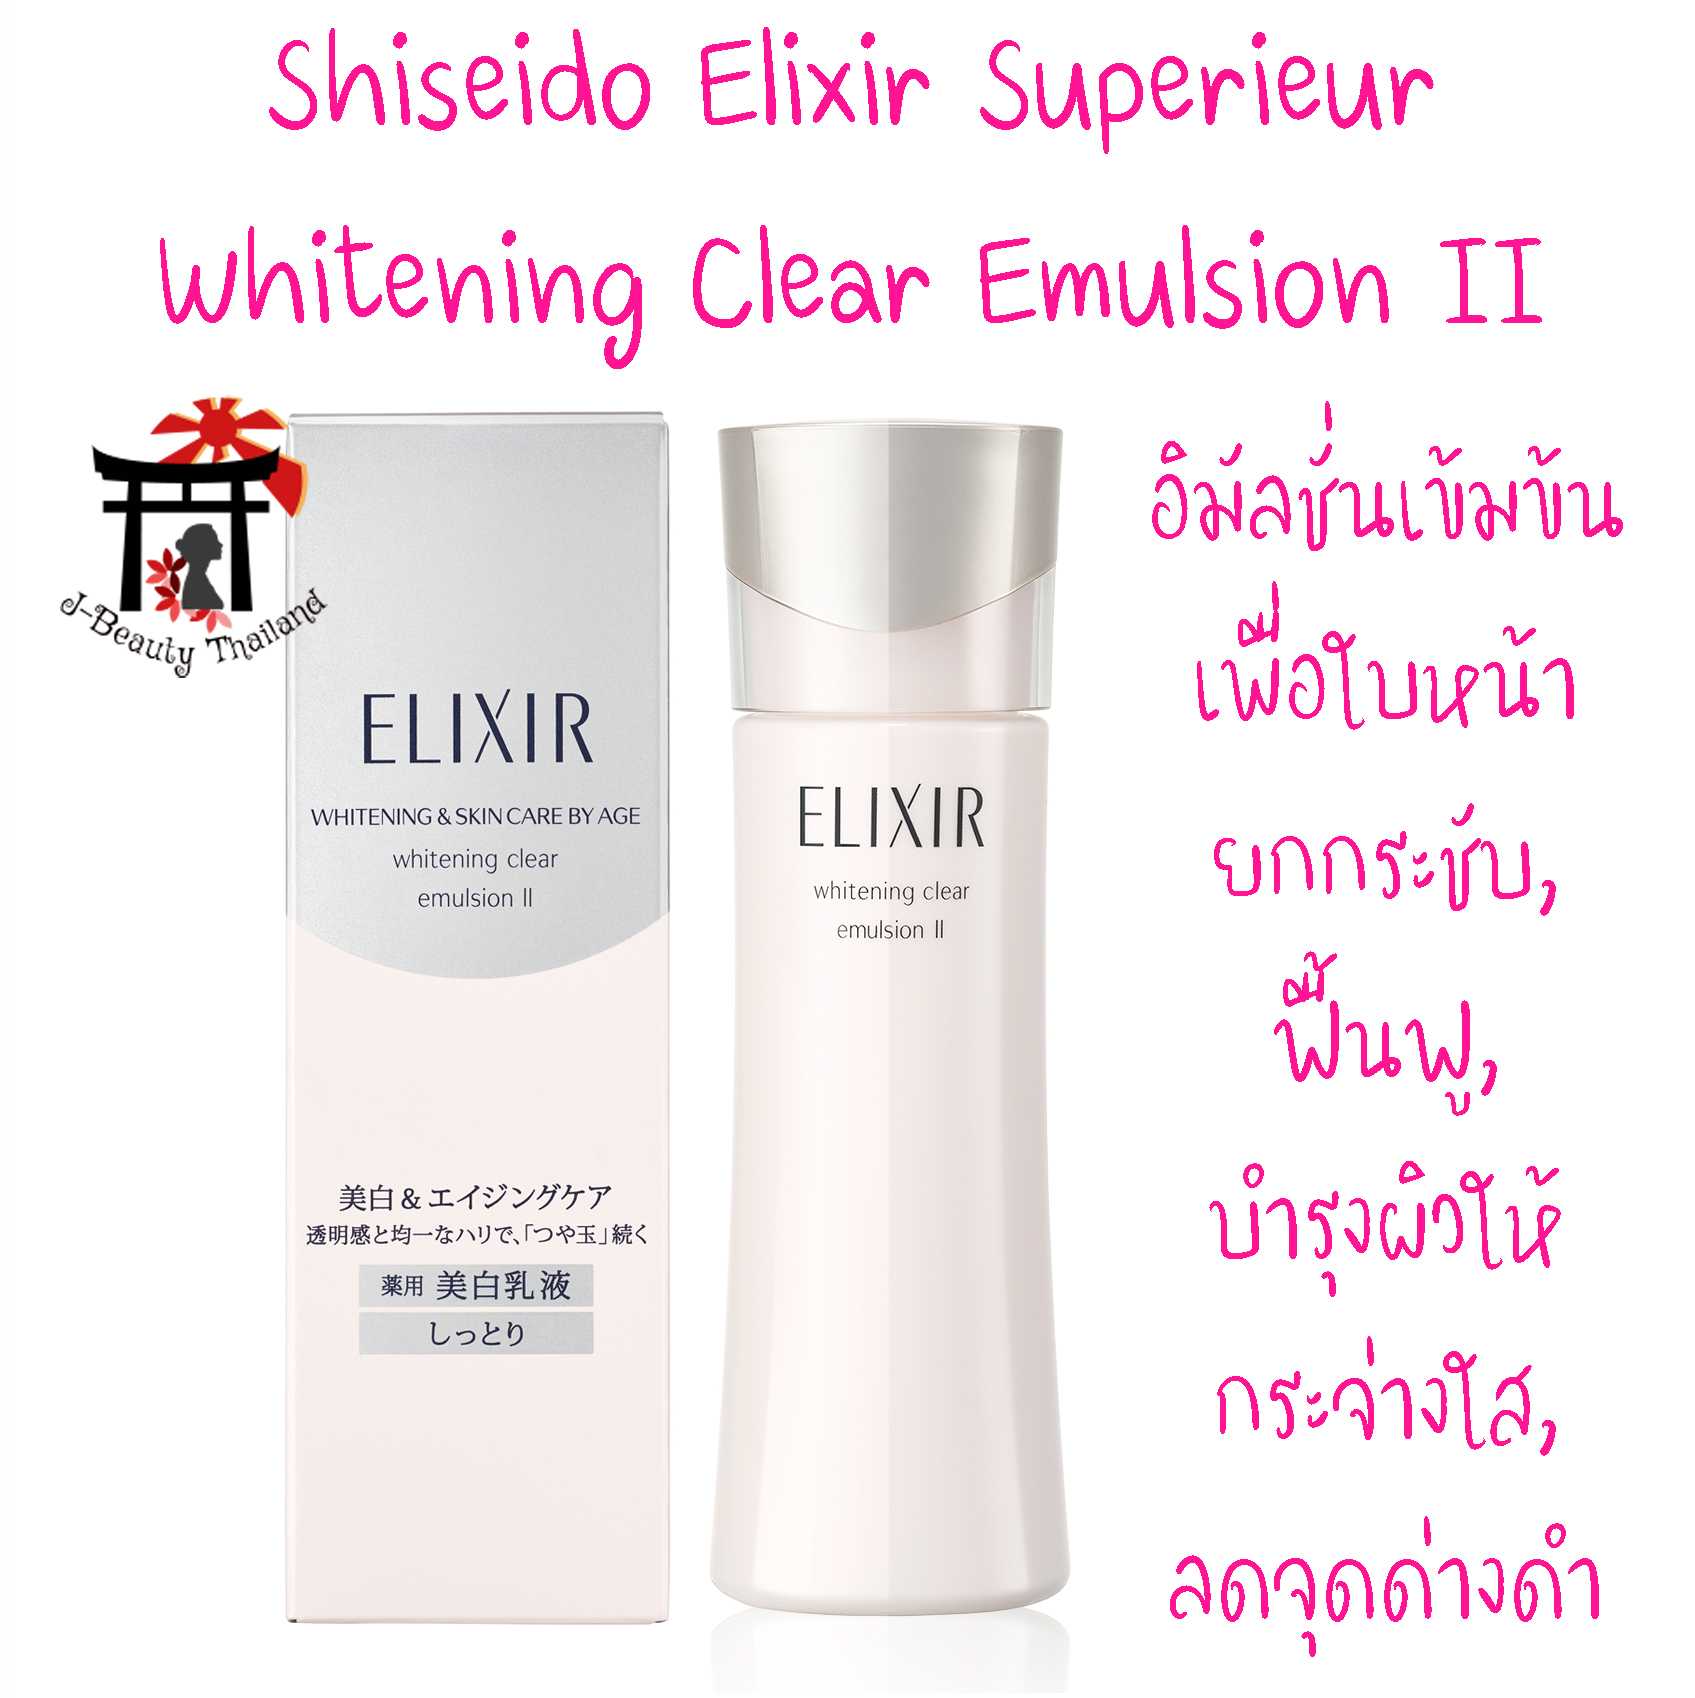 Shiseido Elixir Whitening Clear Emulsion II อิมัลชั่นเข้มข้น ใบหน้ายกกระชับ ฟื้นฟู ให้ผิวกระจ่างใส